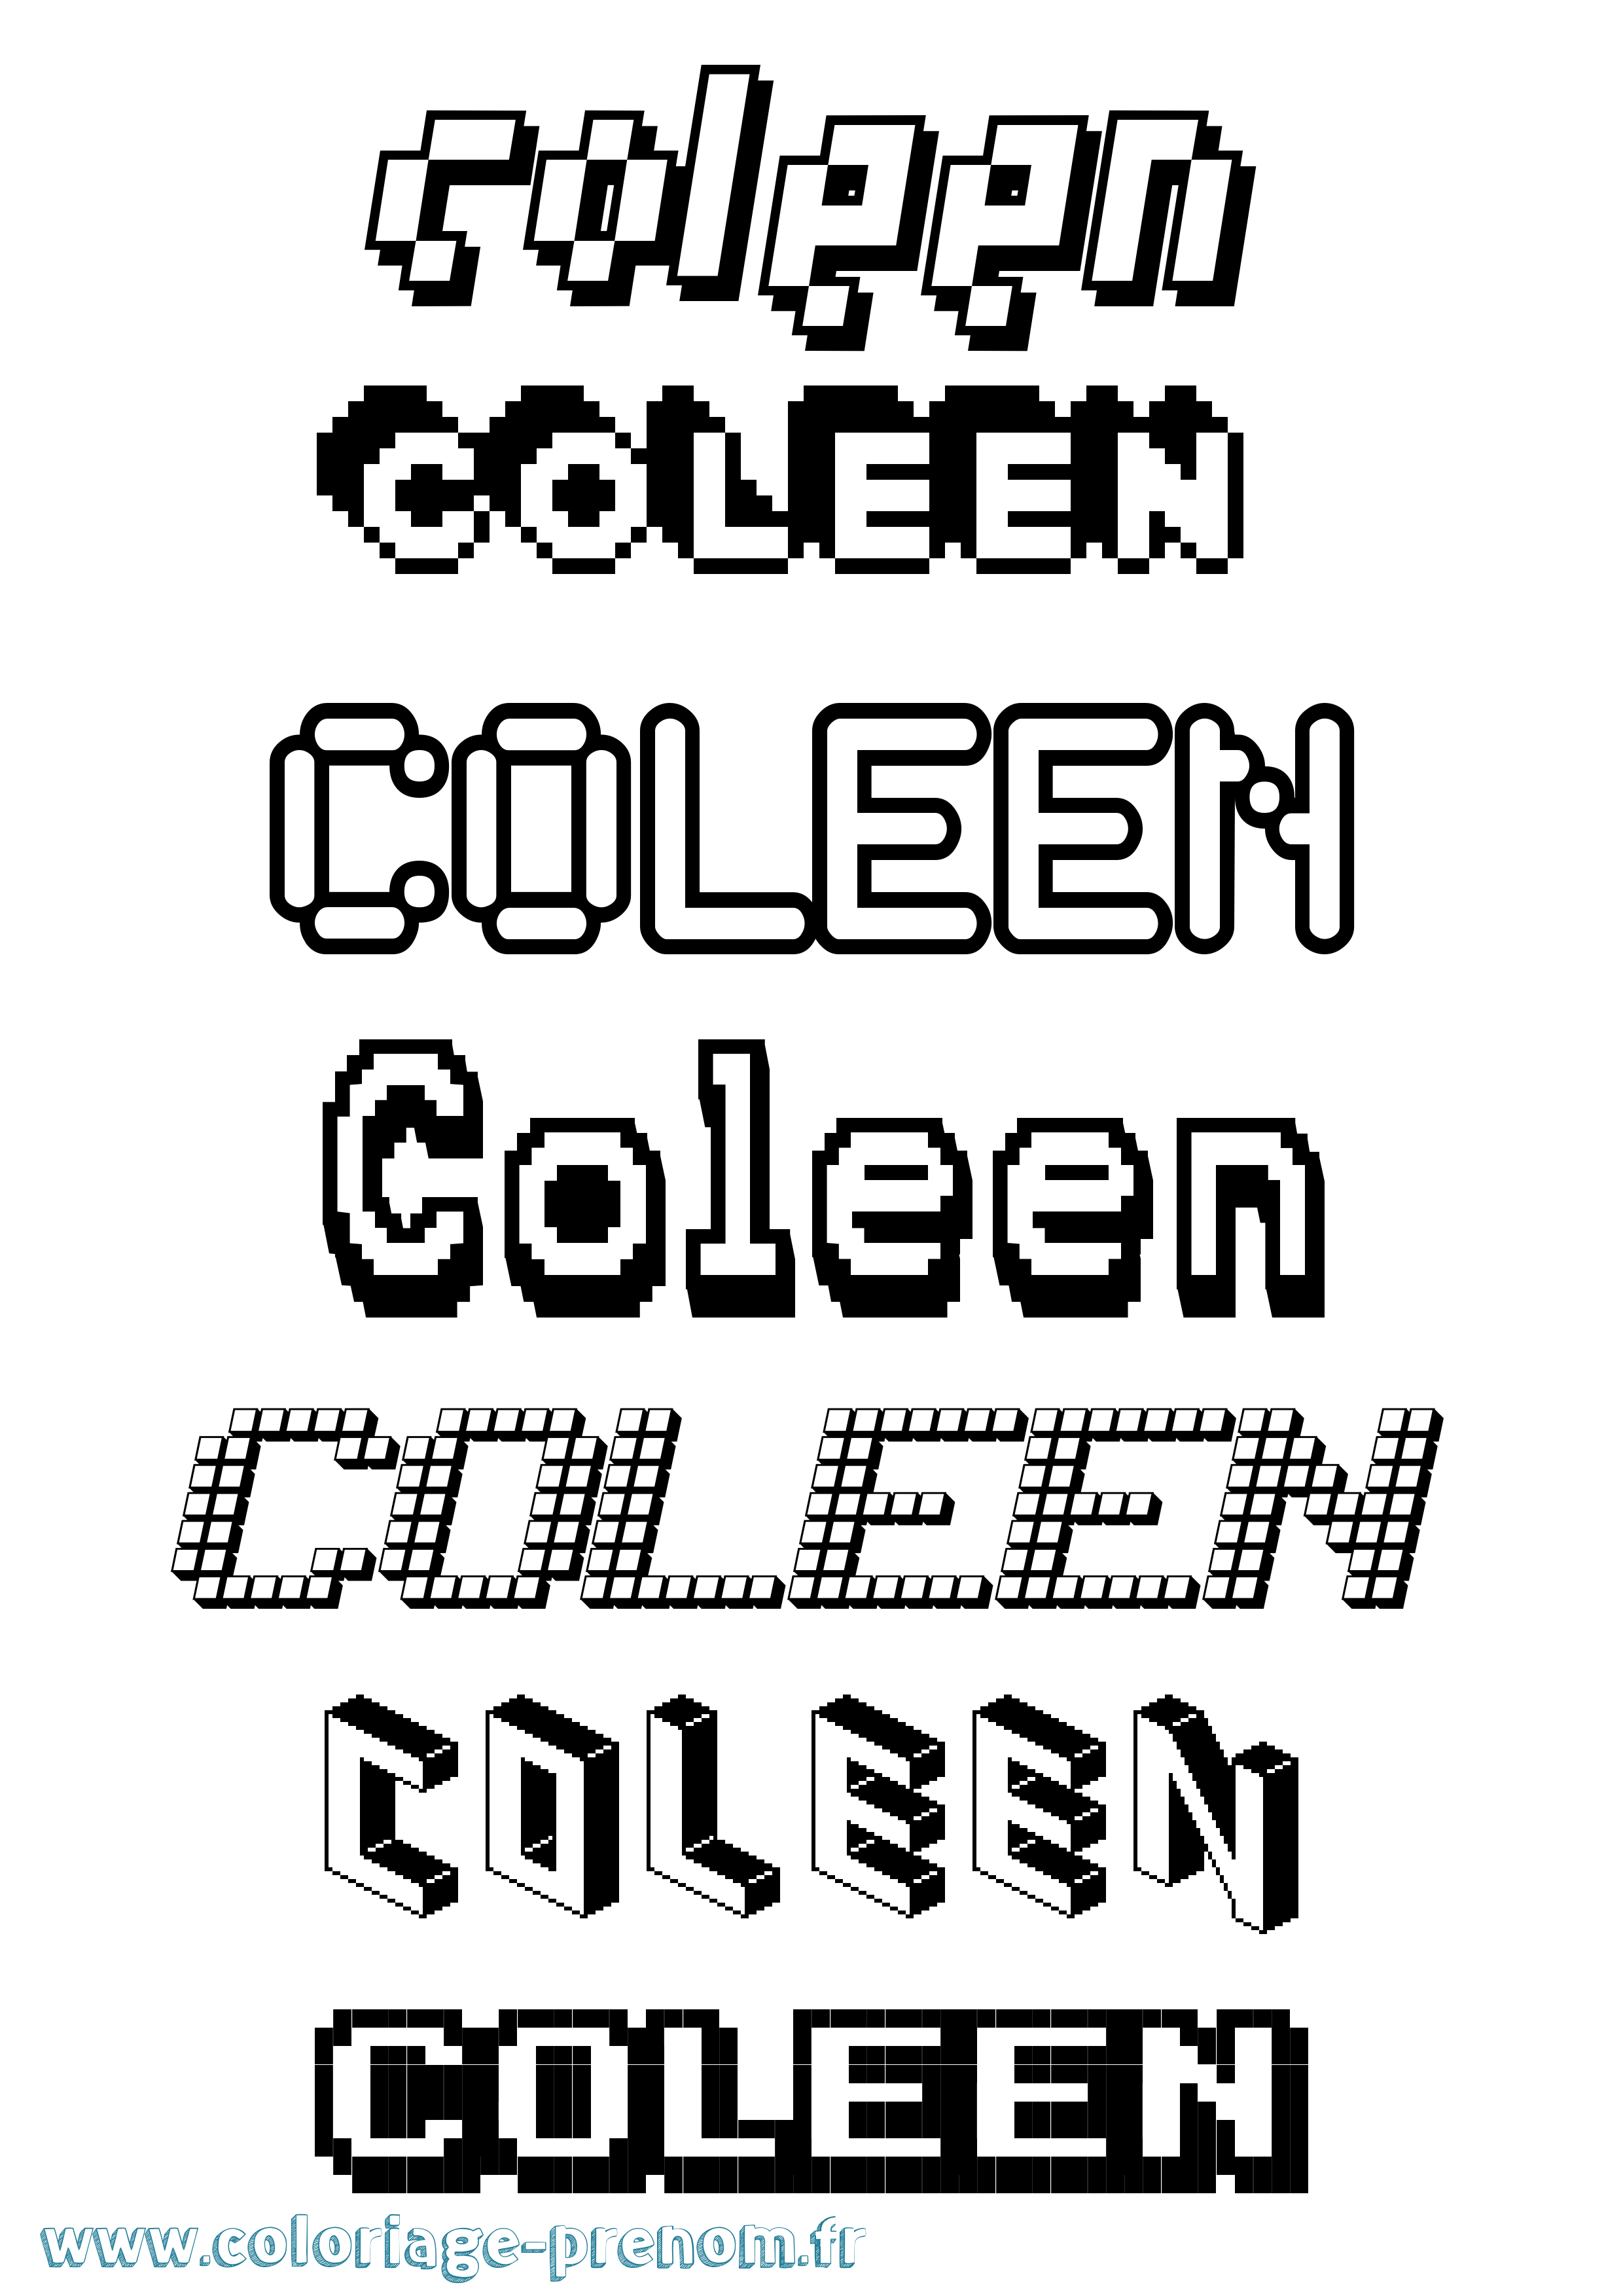 Coloriage prénom Coleen Pixel